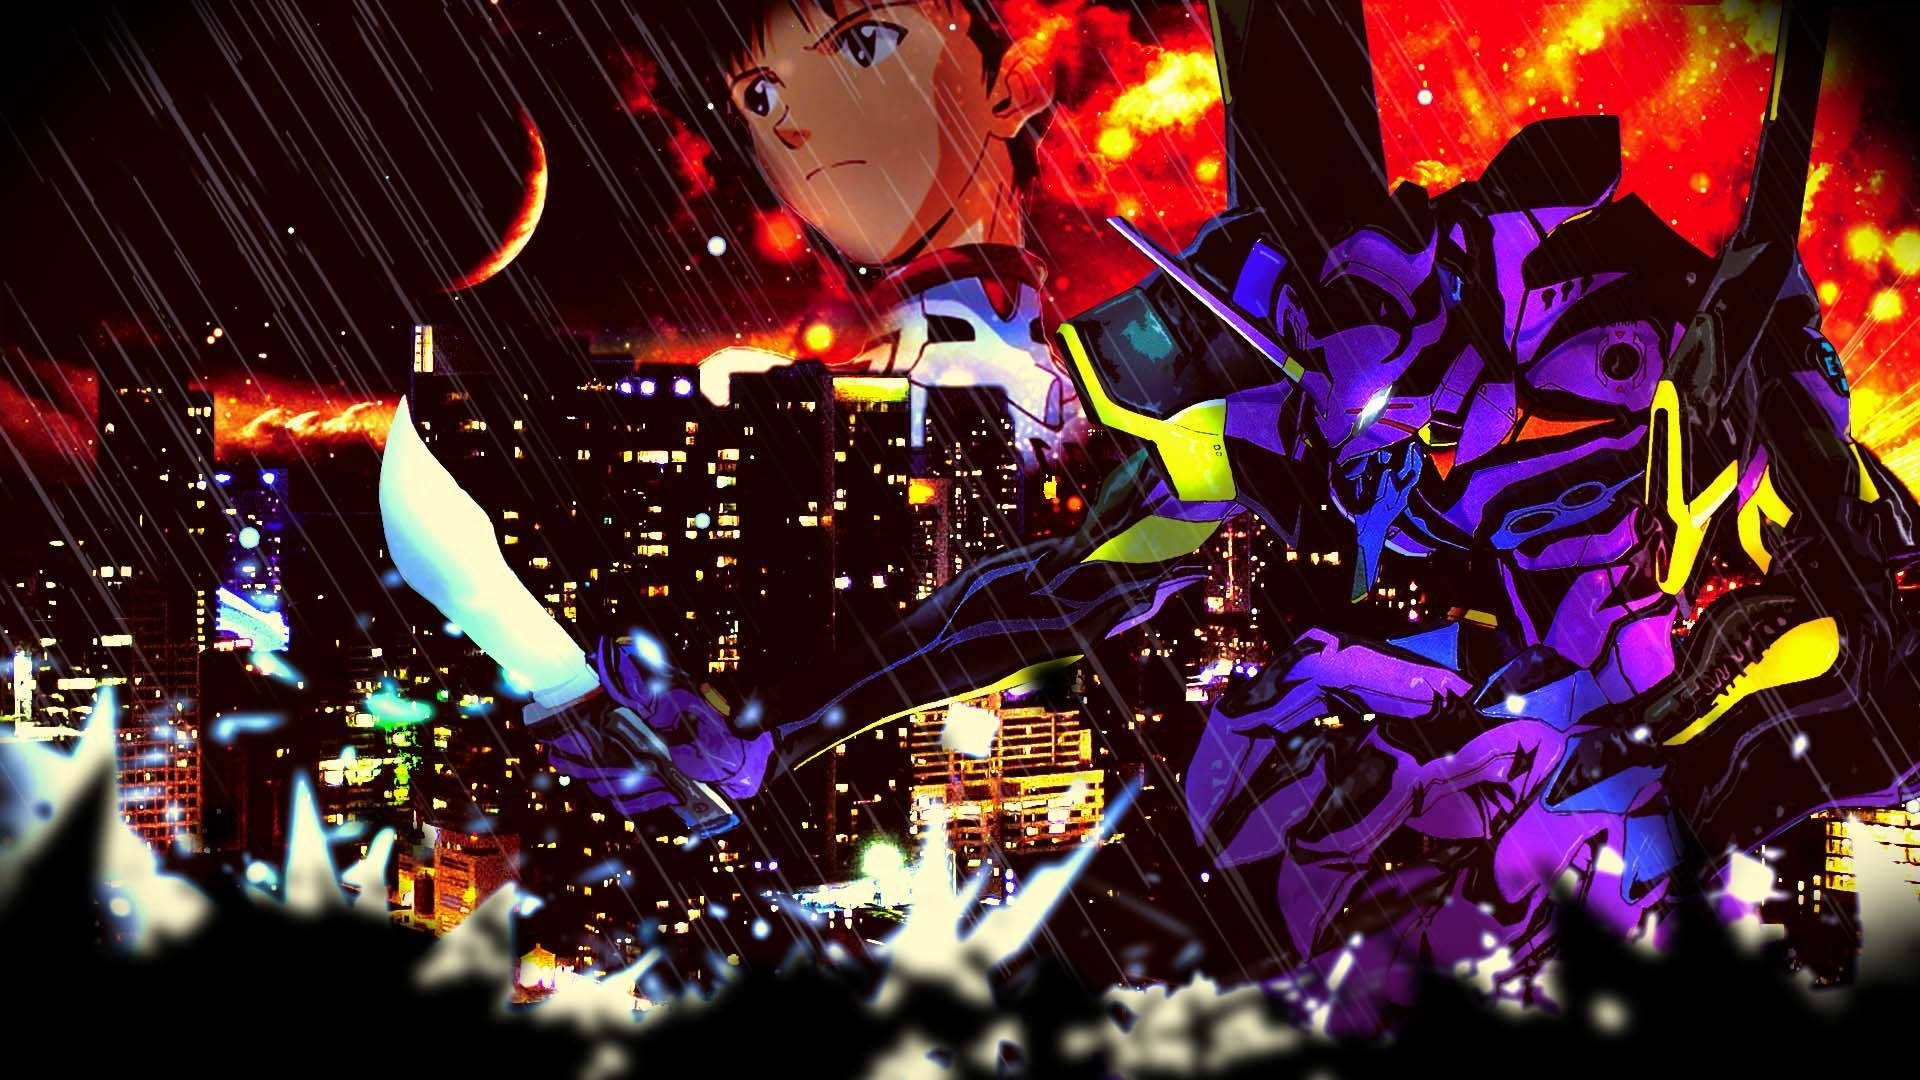 Shinji Ikari and Unit 01- Evangelion ready to fight Wallpaper